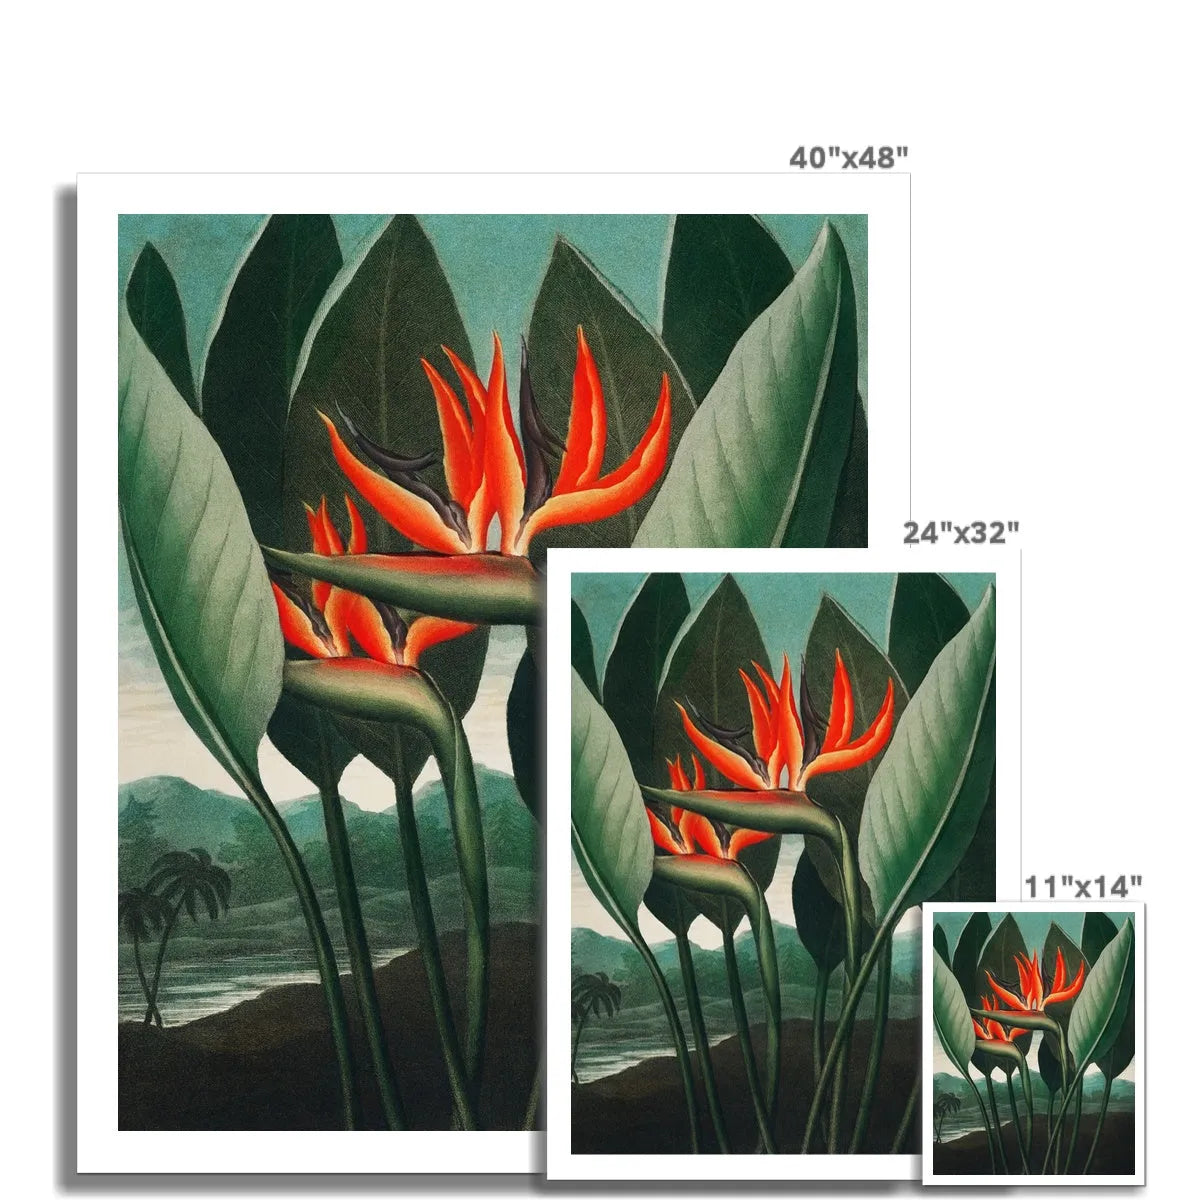 Queen Plant By Robert John Thornton Fine Art Print - Posters Prints & Visual Artwork - Aesthetic Art